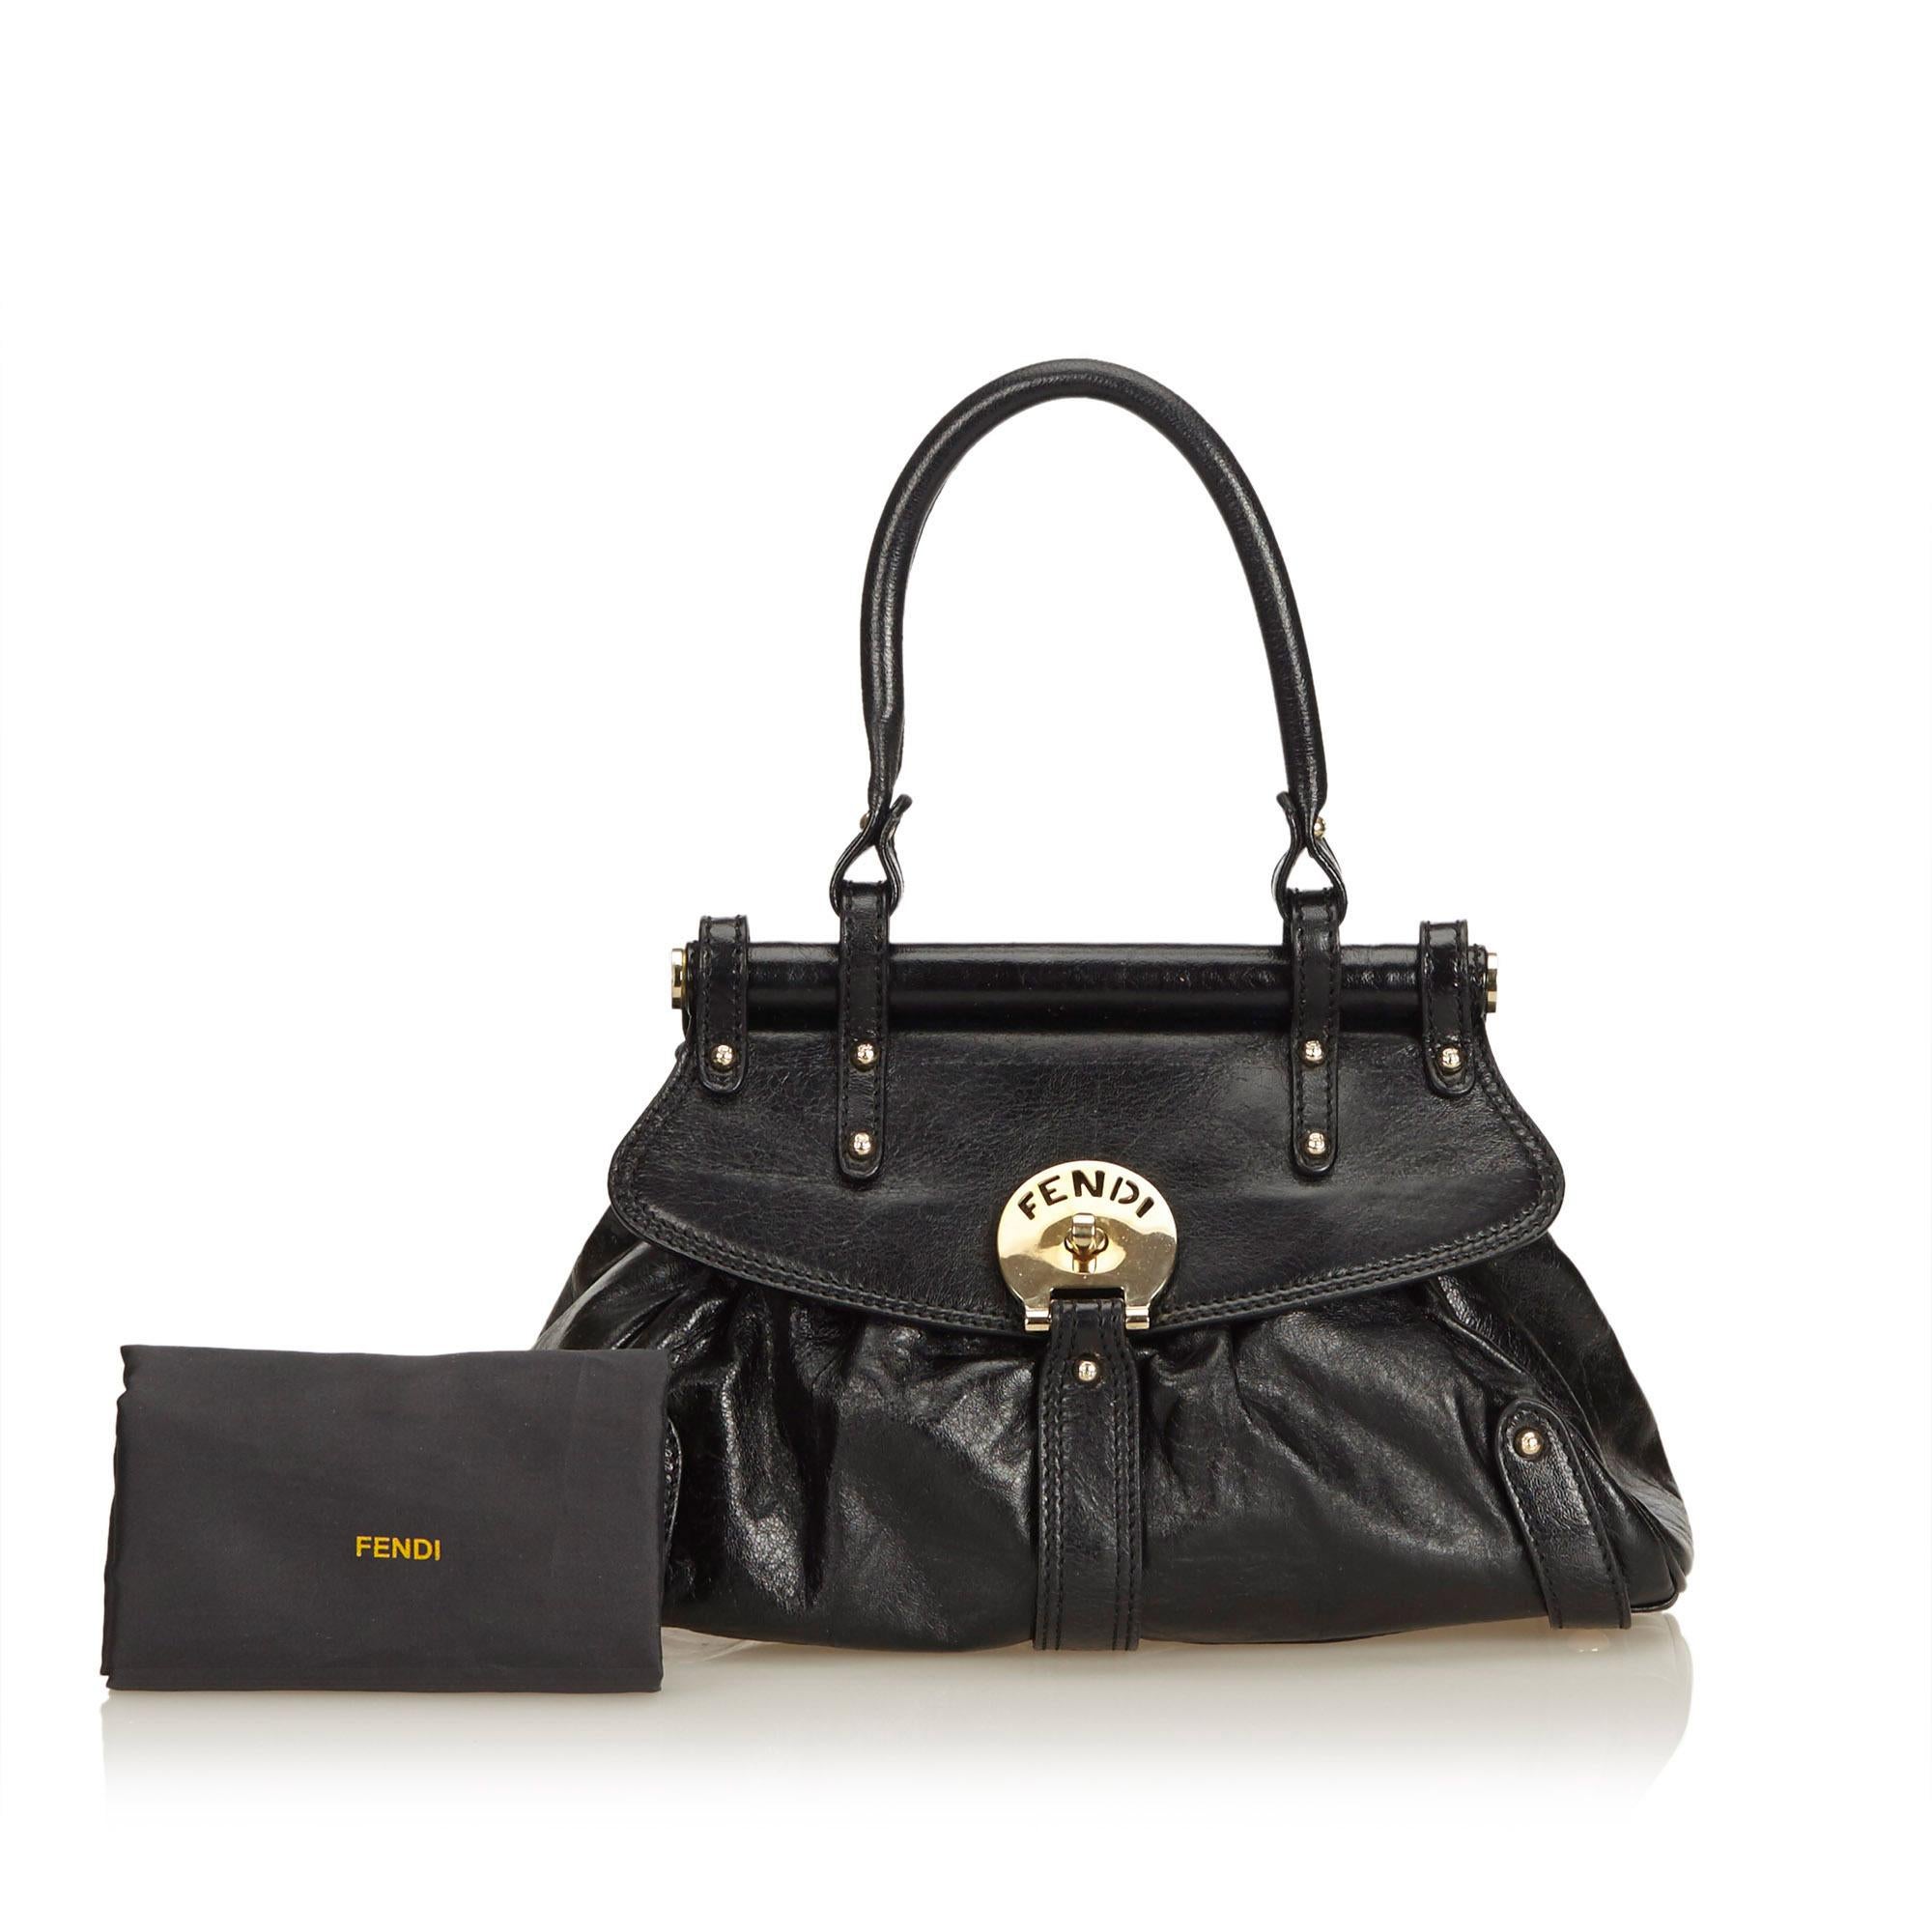 Fendi Black Leather Handbag For Sale 5